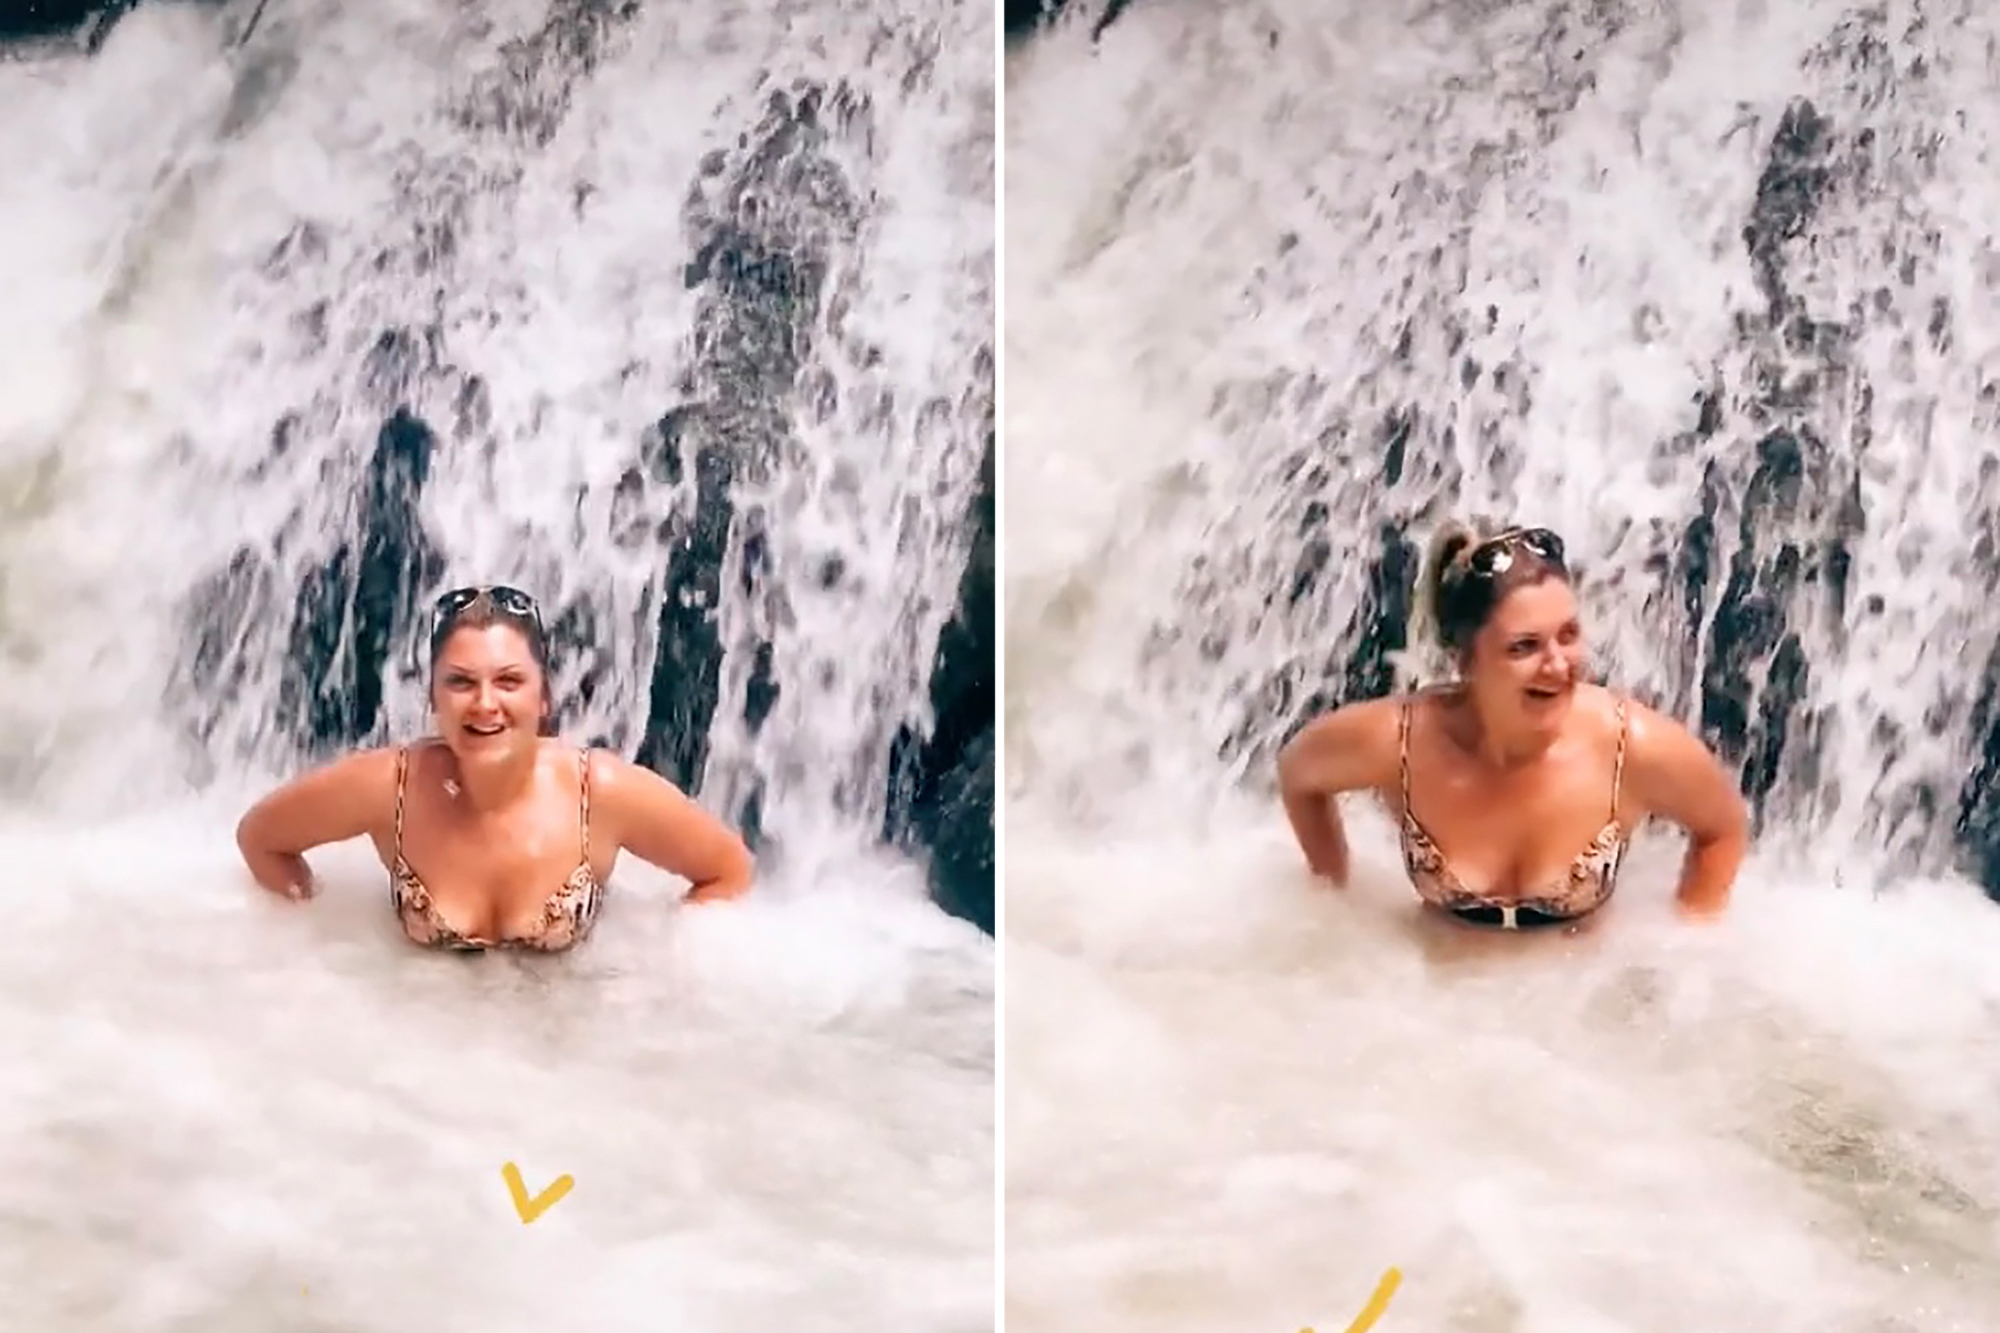 Girl Loses Bathing Suit On Water Slide multimerios doble